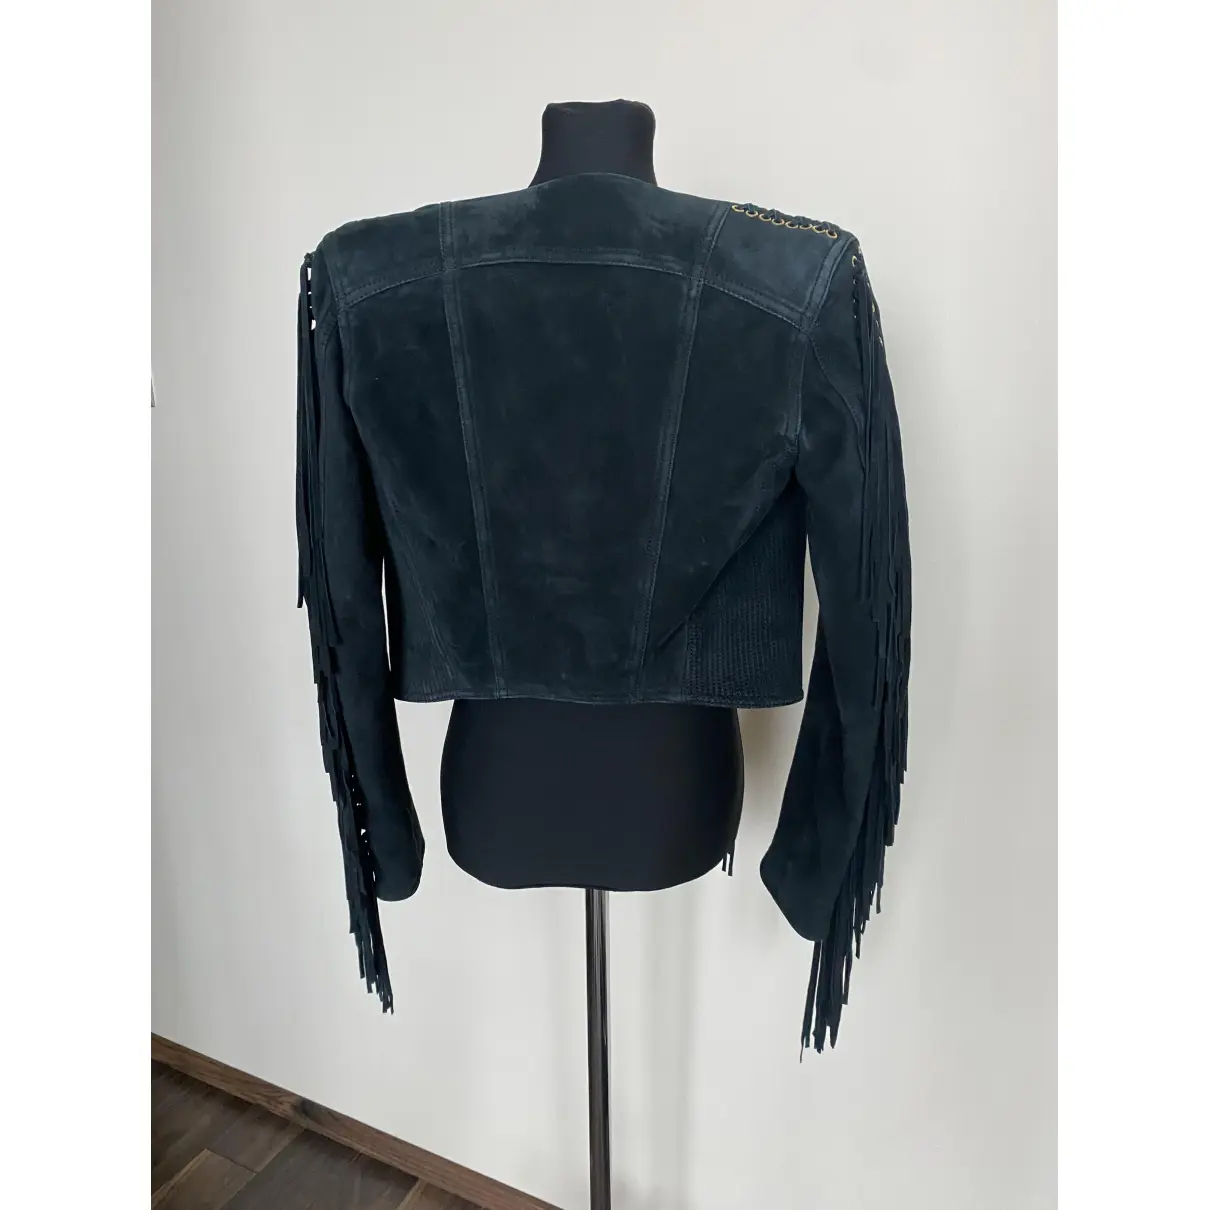 Buy Balmain Leather jacket online